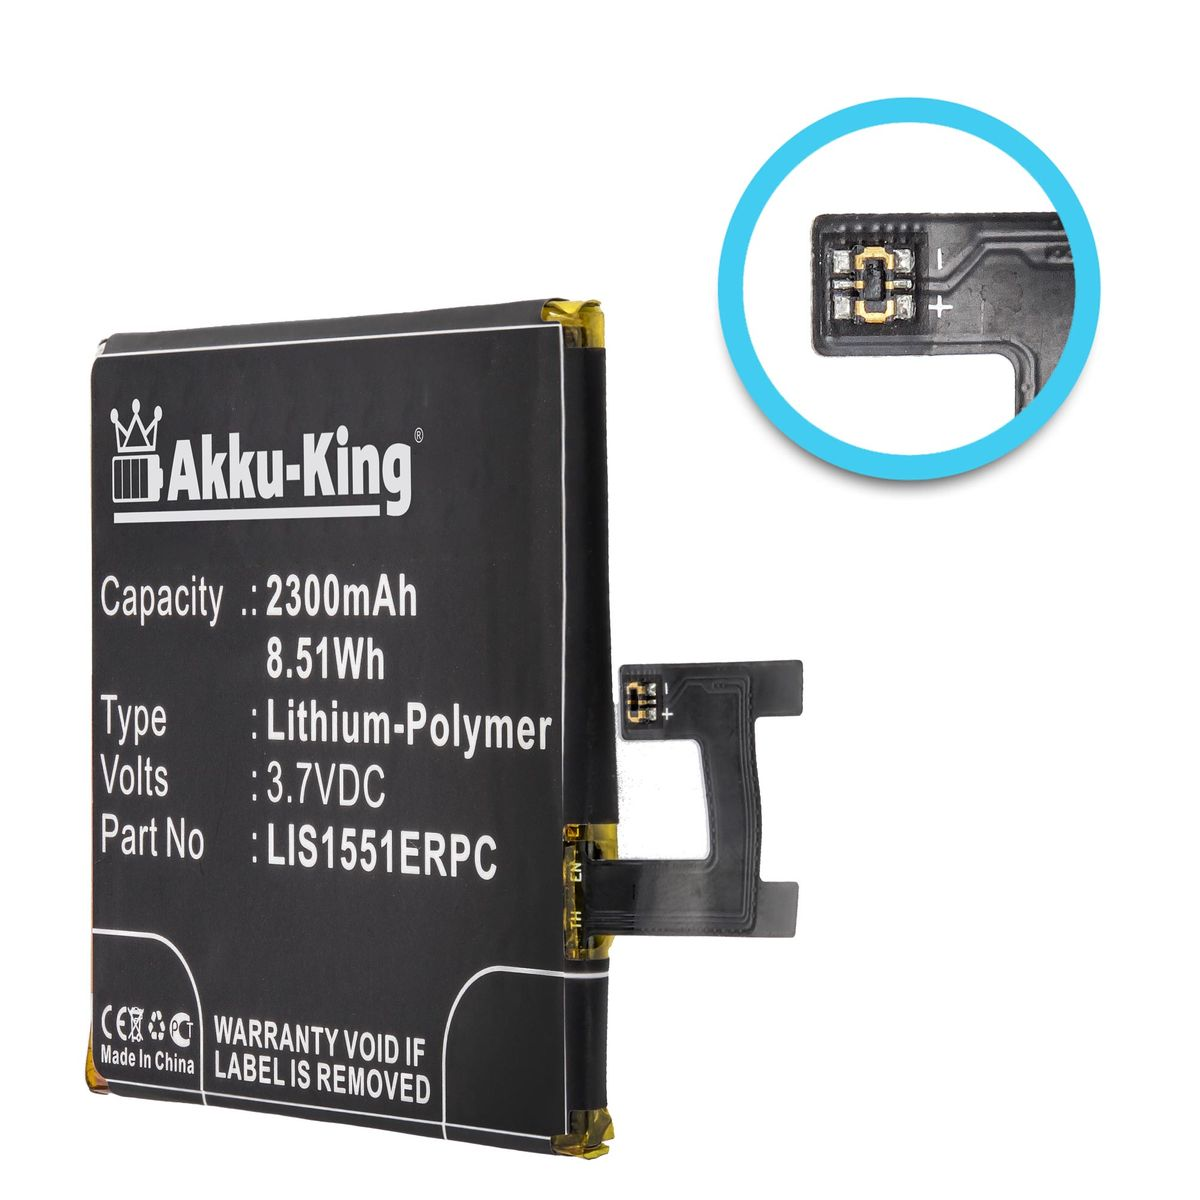 Li-Polymer Akku Handy-Akku, Sony 3.7 AKKU-KING LIS1551ERPC Volt, kompatibel mit 2300mAh